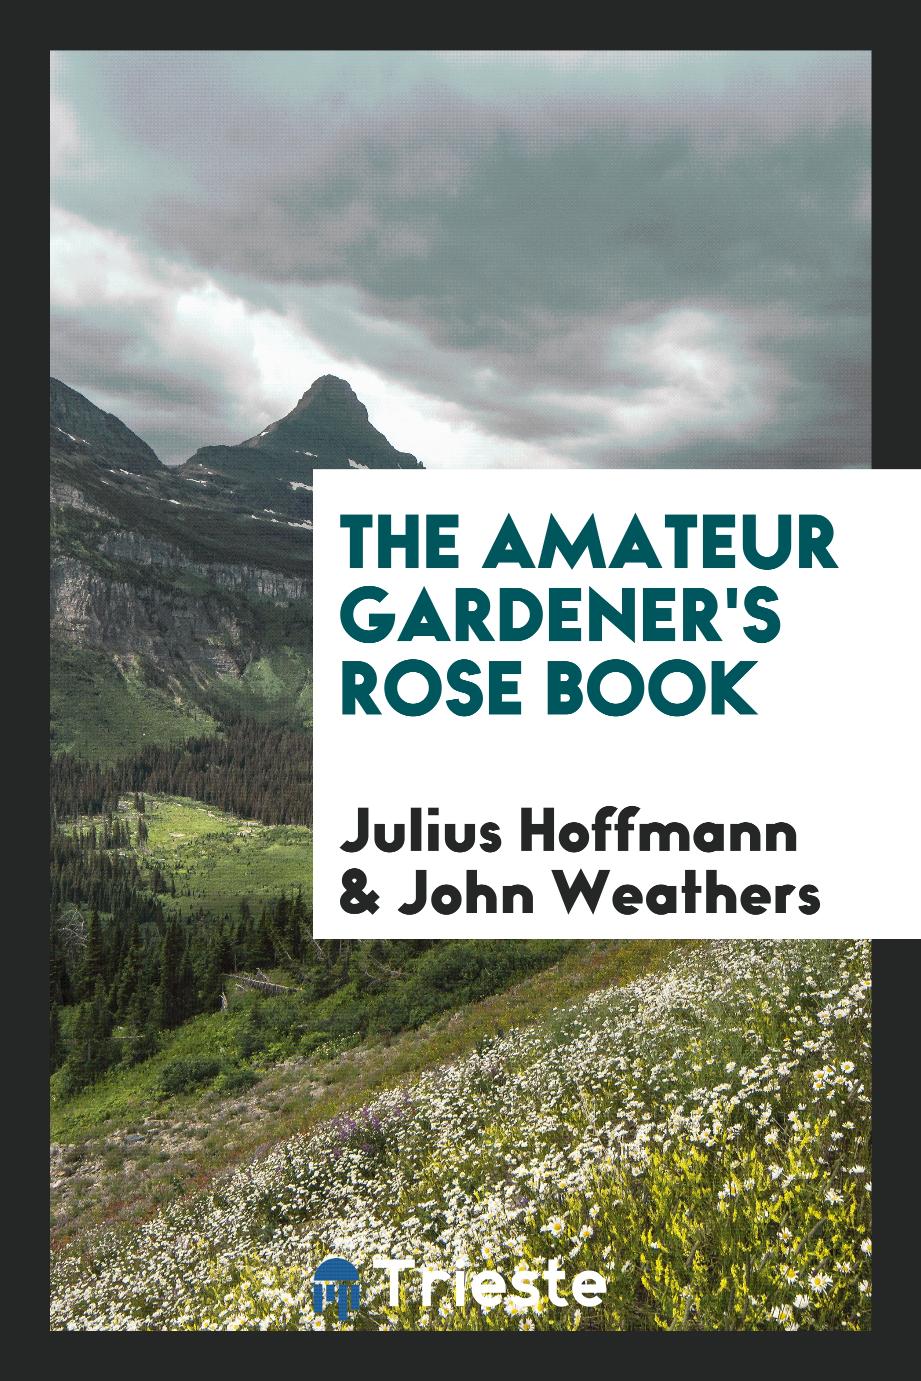 The Amateur Gardener's Rose Book